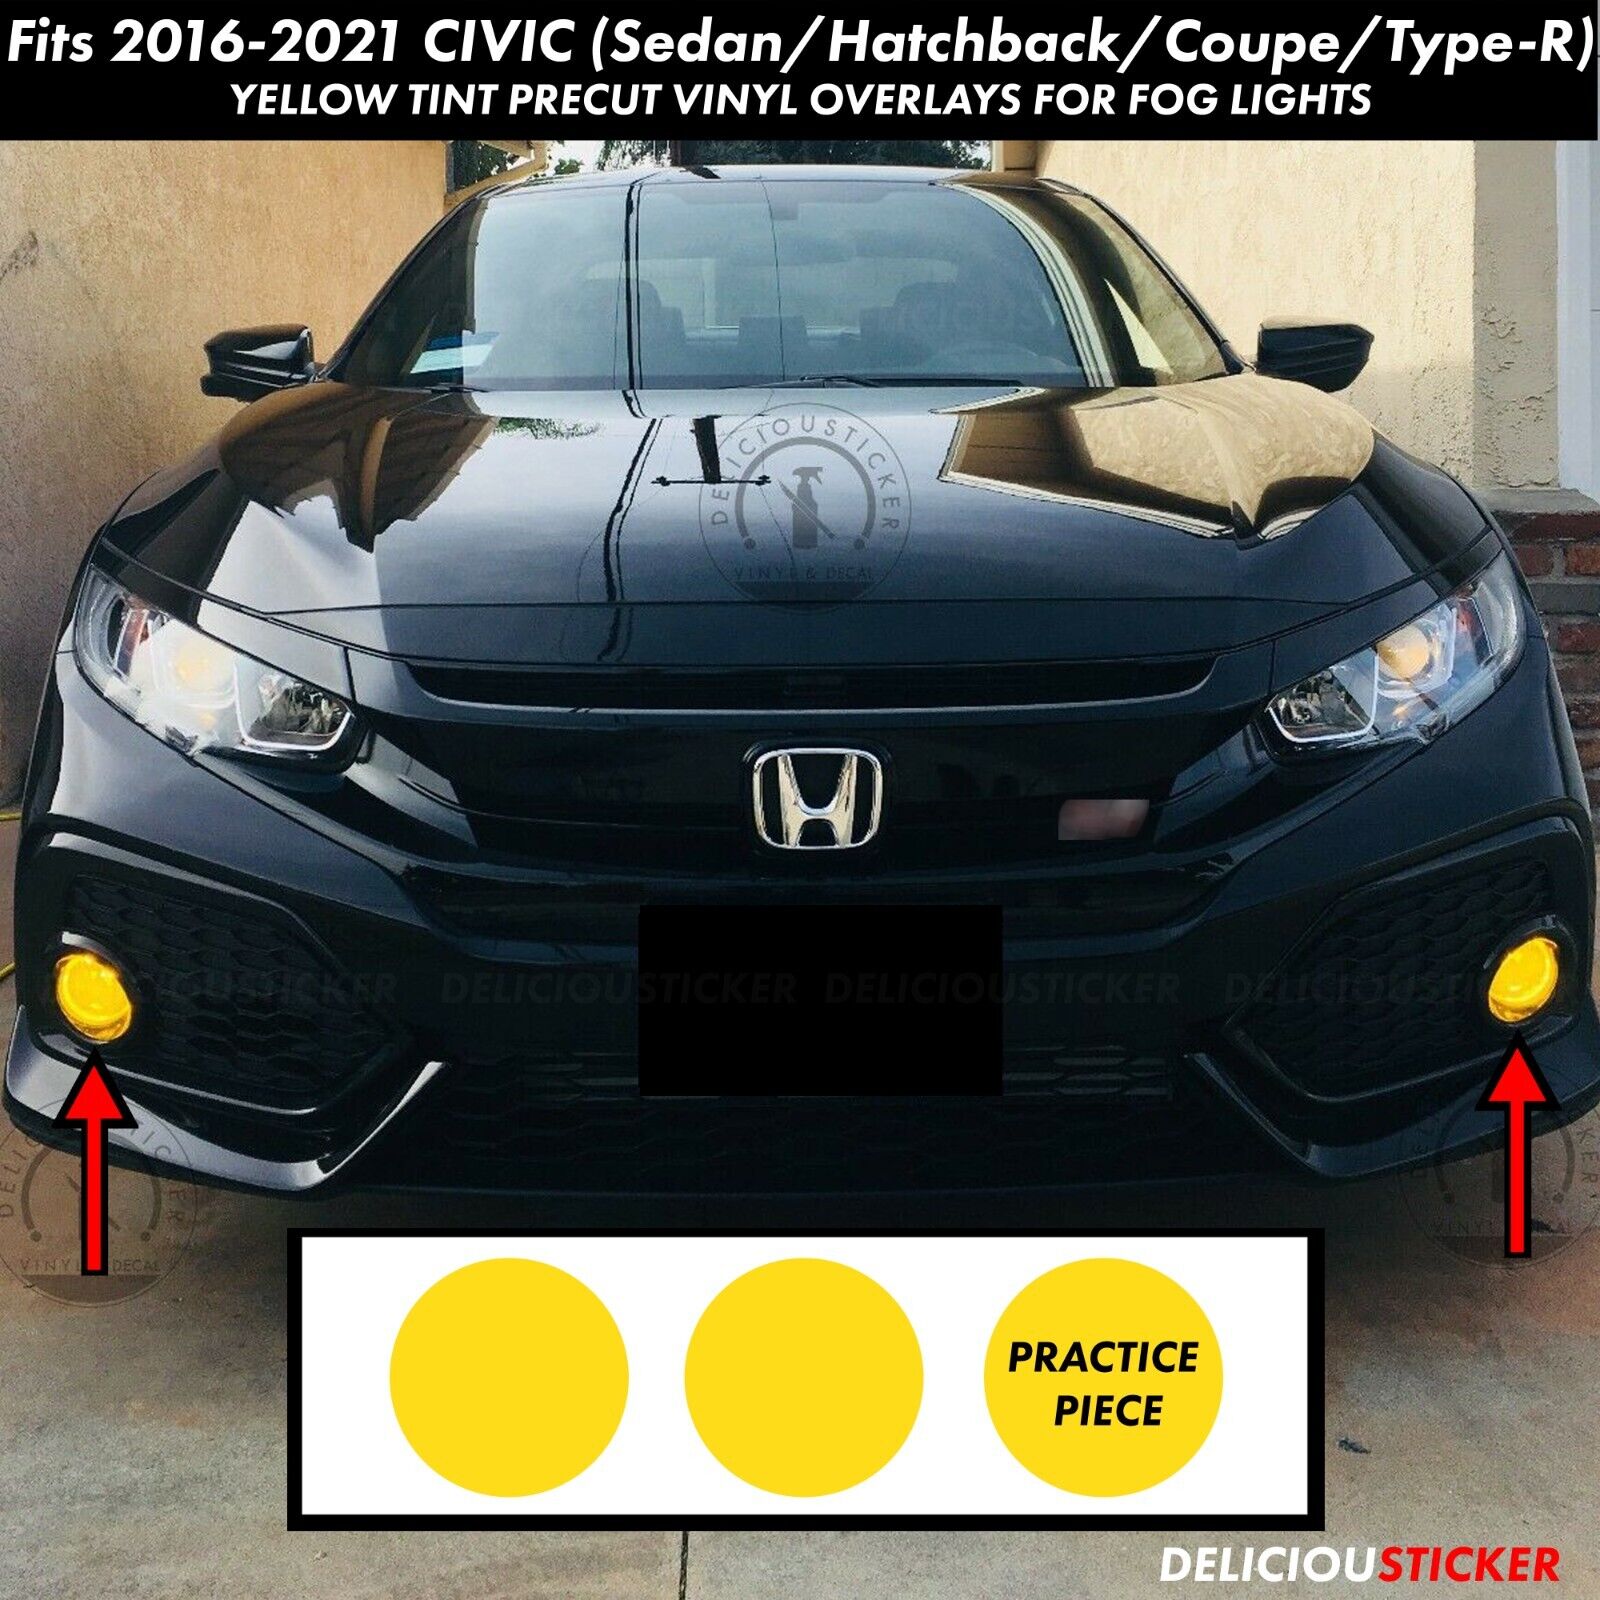 Fits 2016-2021 Civic YELLOW Fog Light Overlays Vinyl Tint Hatchback Sedan Coupe